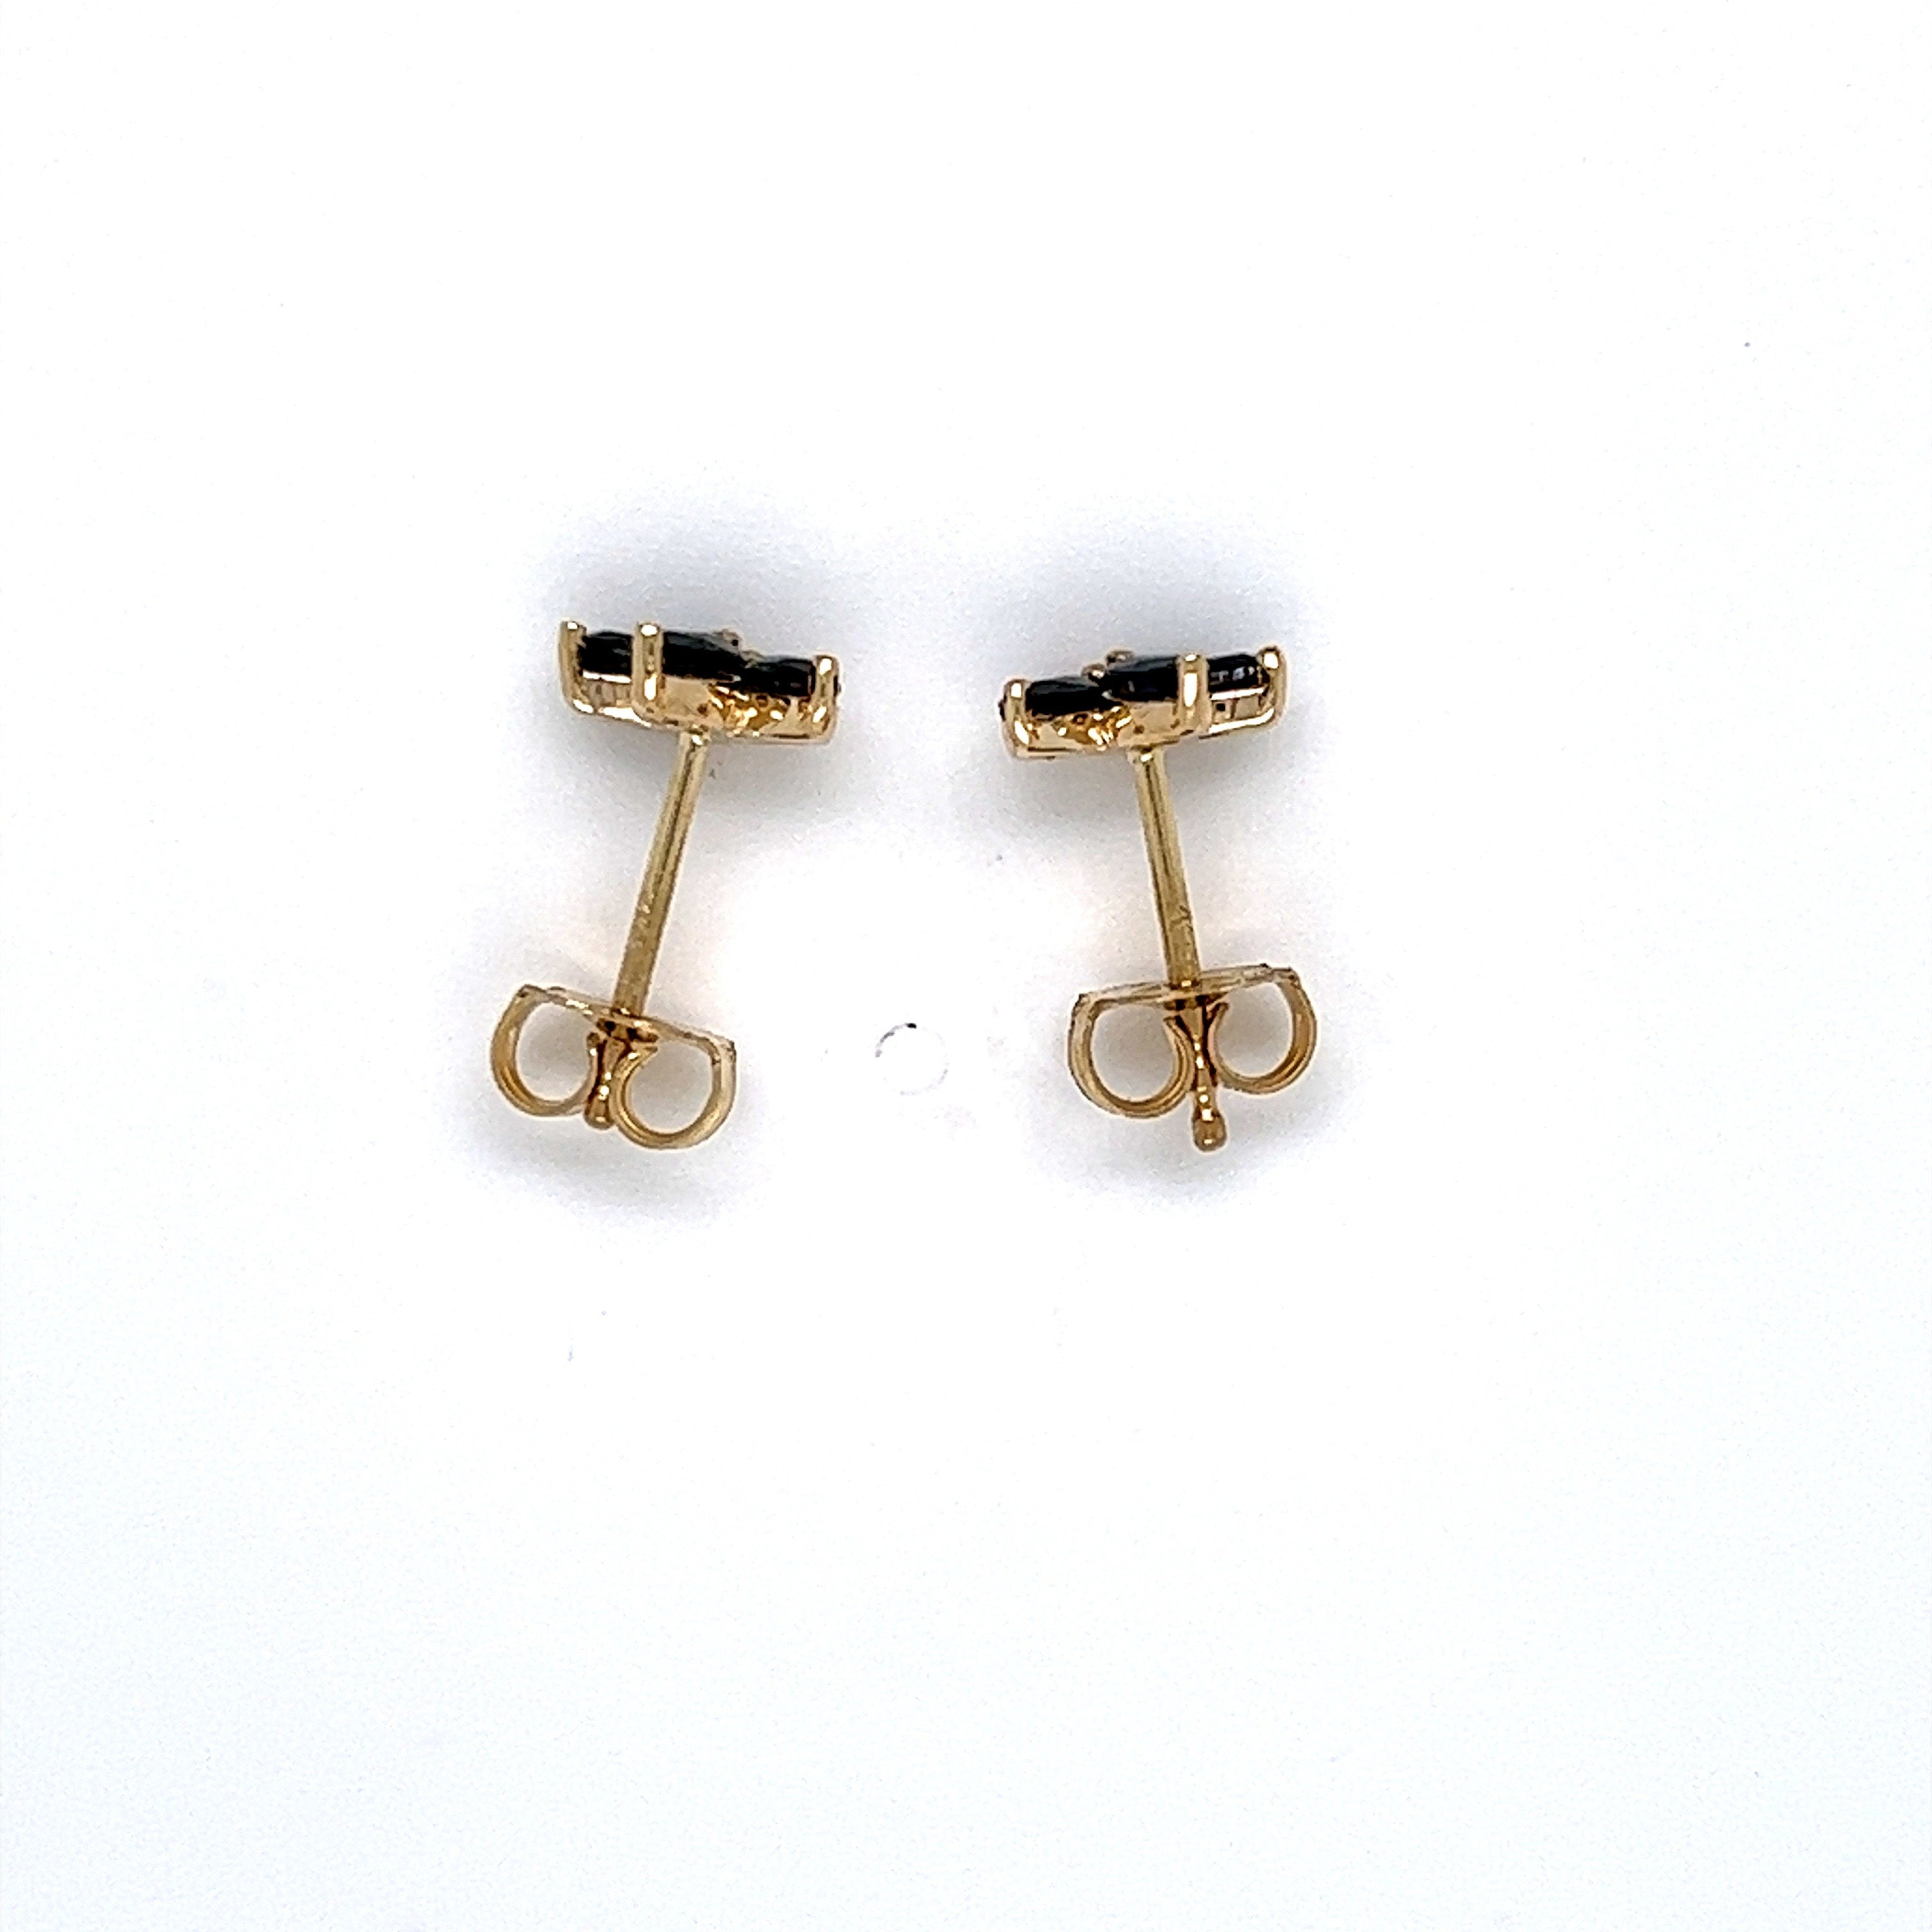 Sapphire Stud Earrings in 14K Yellow Gold - 1.00ct.